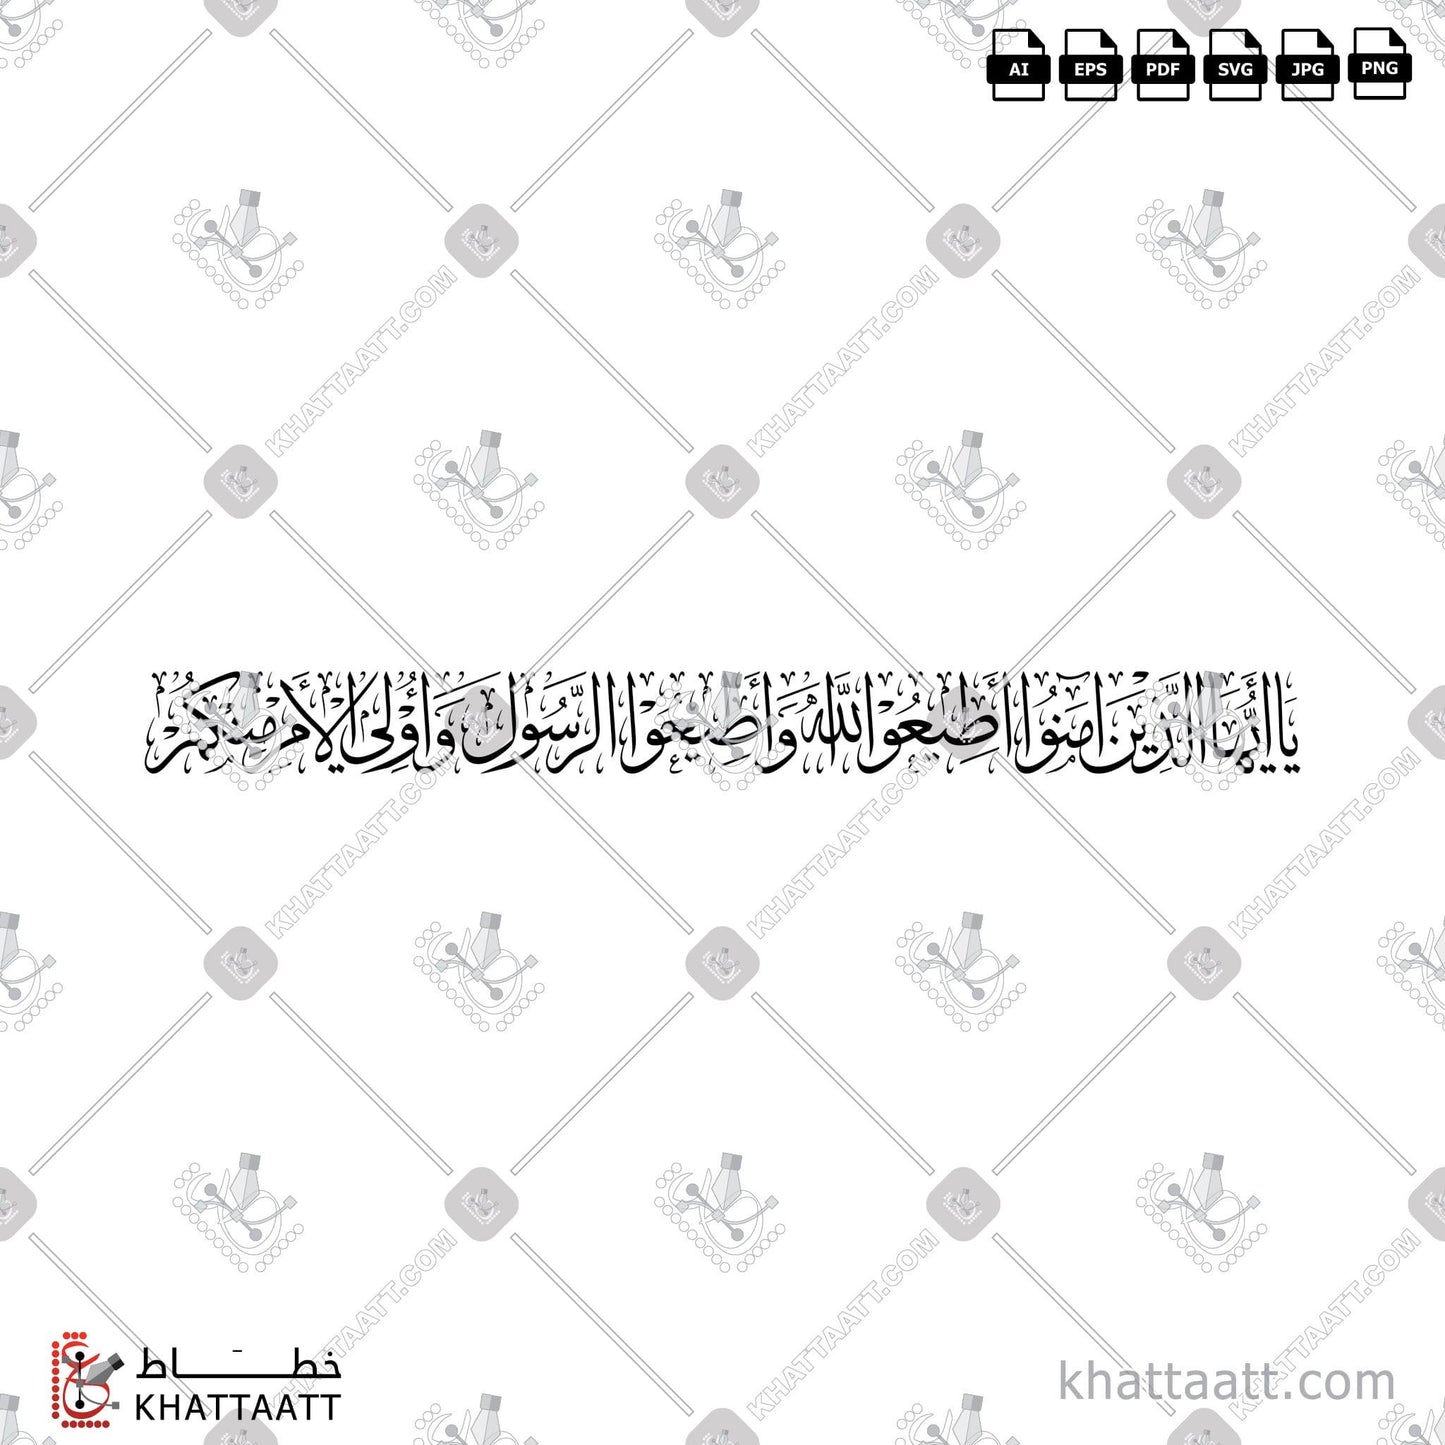 Download Arabic Calligraphy of يا أيها الذين آمنوا أطيعوا الله وأطيعوا الرسول وأولي الأمر منكم in Thuluth - خط الثلث in vector and .png